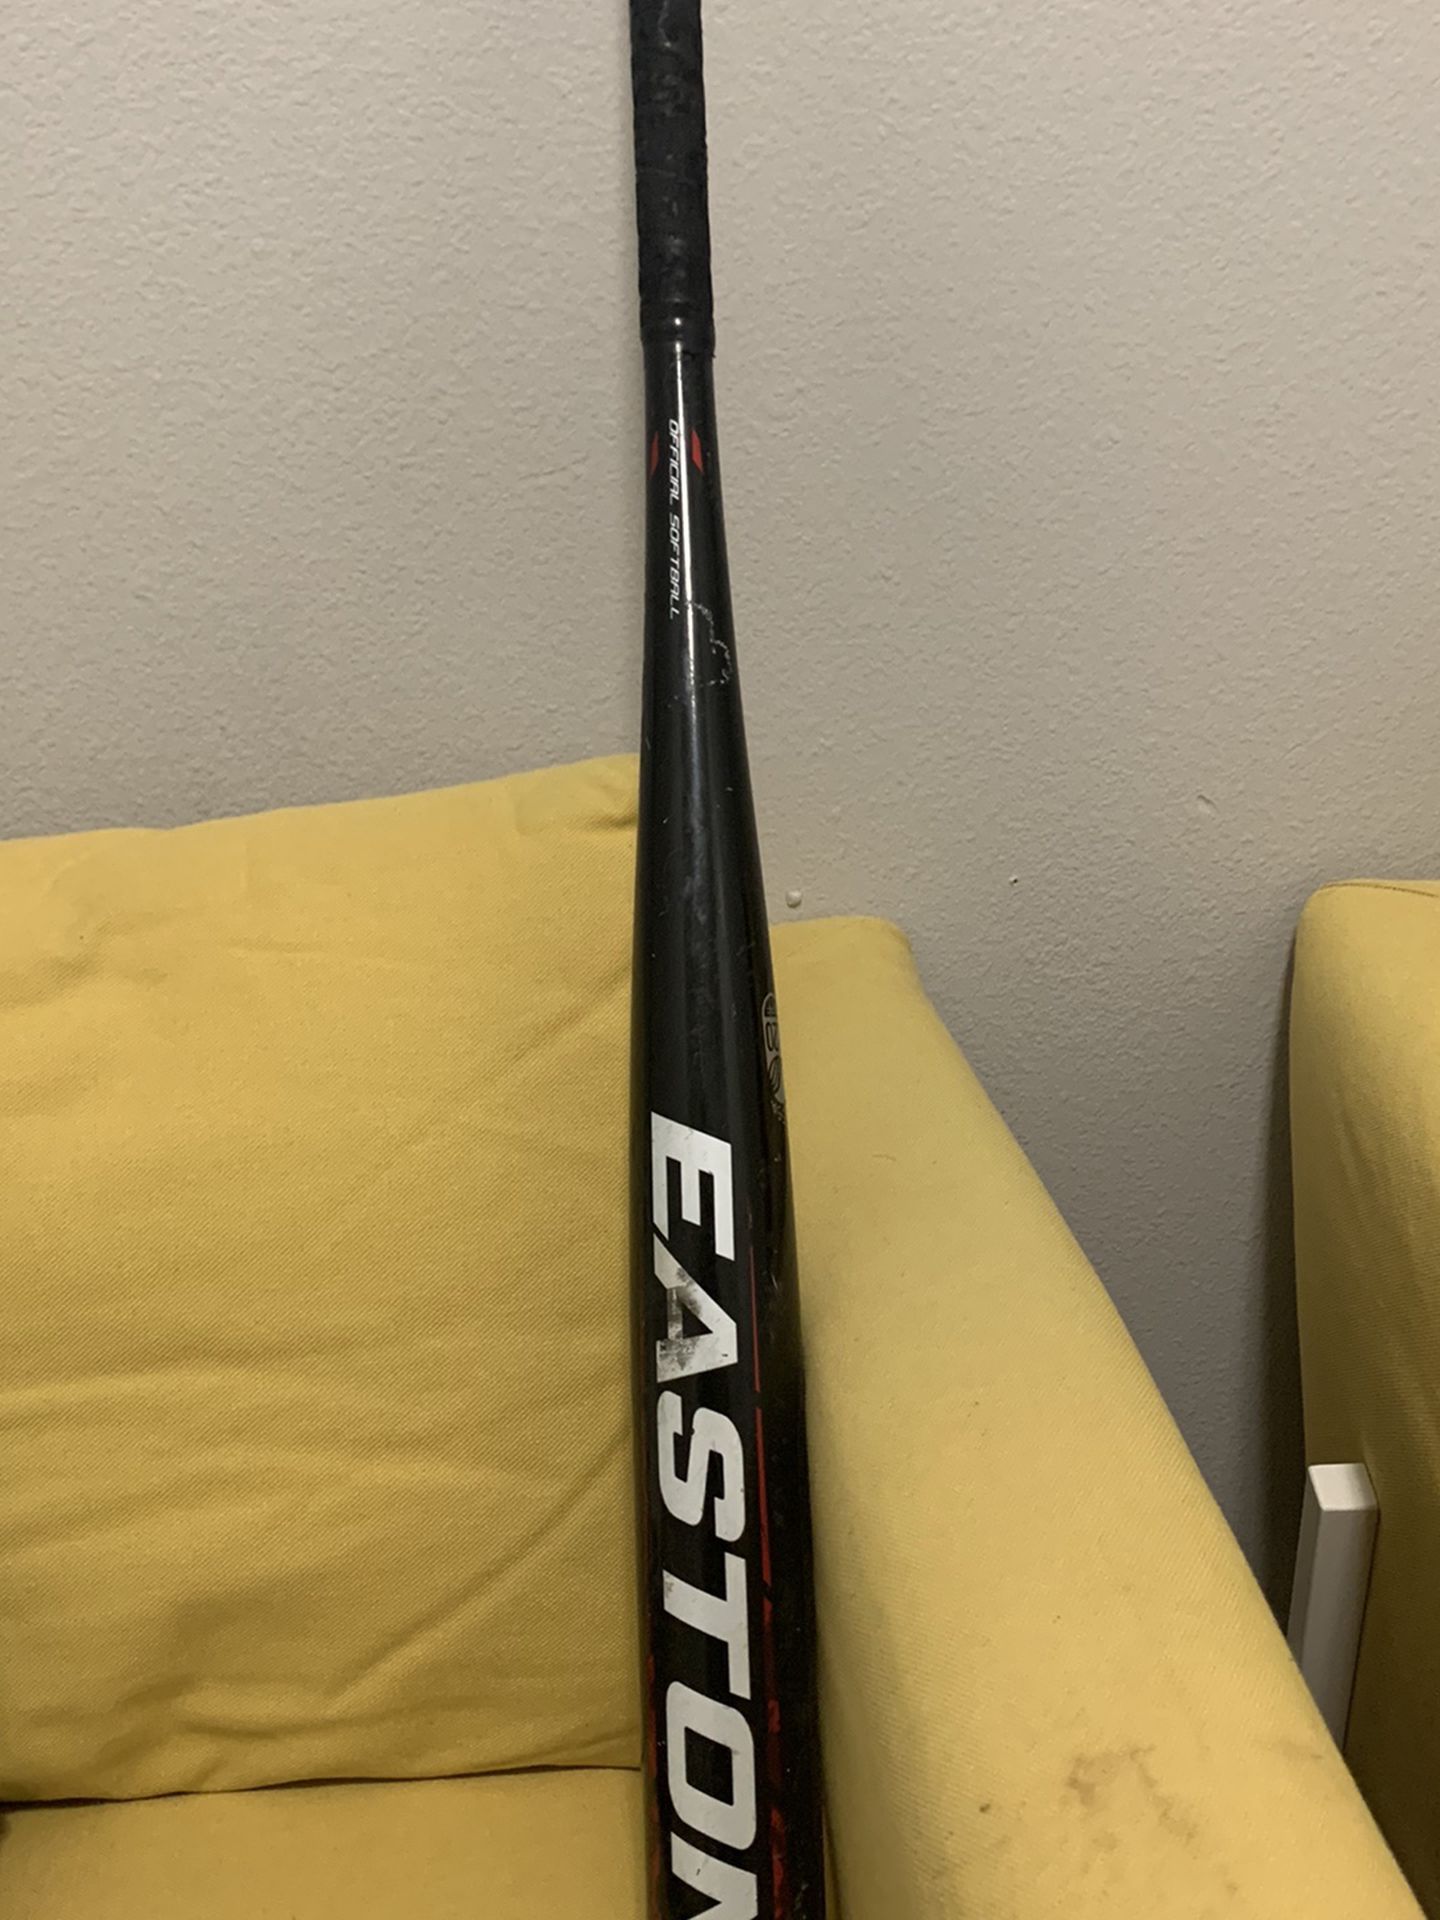 Two Great Easton Softball Bats